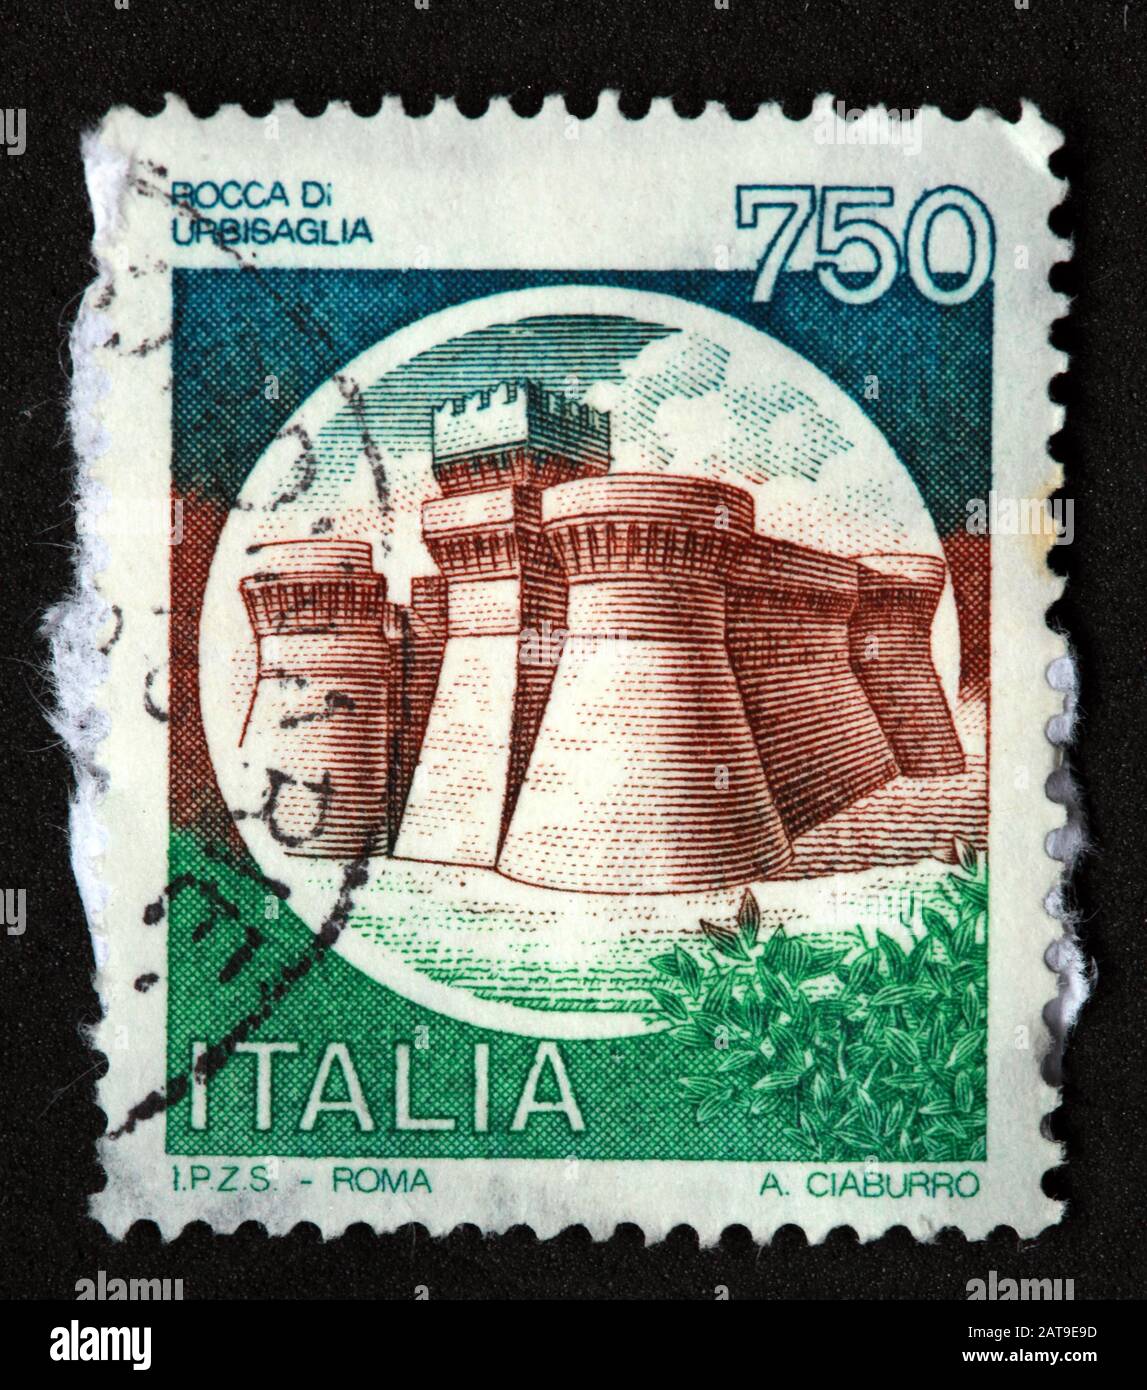 Timbre italien, poste Italia utilisé et franked Stamp, châteaux d'Italie, Italia 750lire Bocca Di Urbisaglia Roma A.Ciaburro Banque D'Images